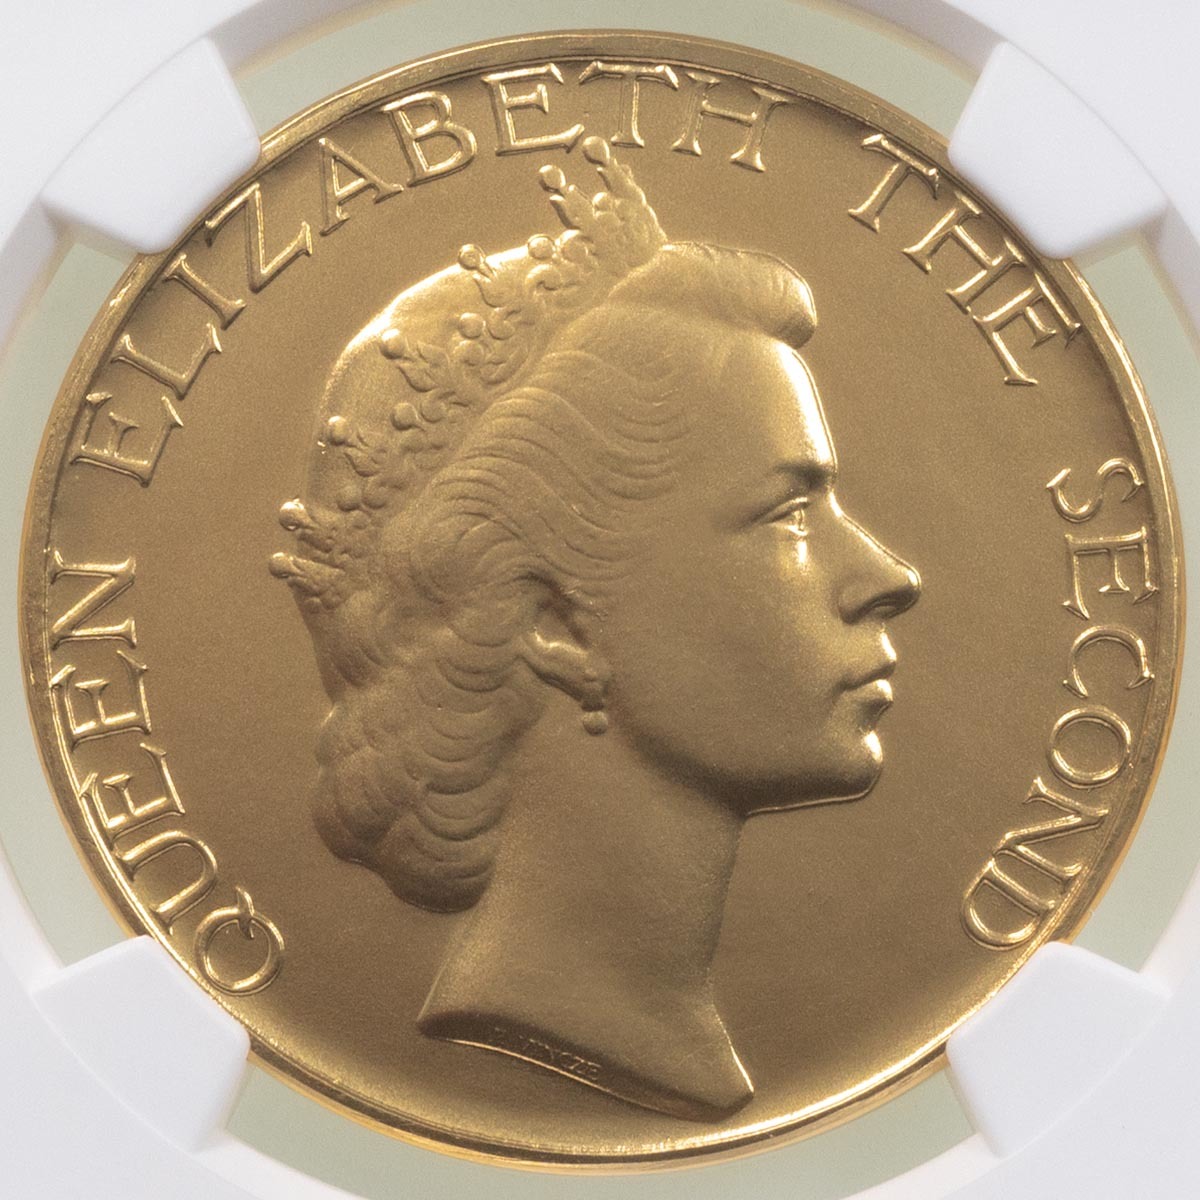 1953 Queen Elizabeth II Gold Coronation Medal Paul Vincze NGC Graded MS 63 Obverse